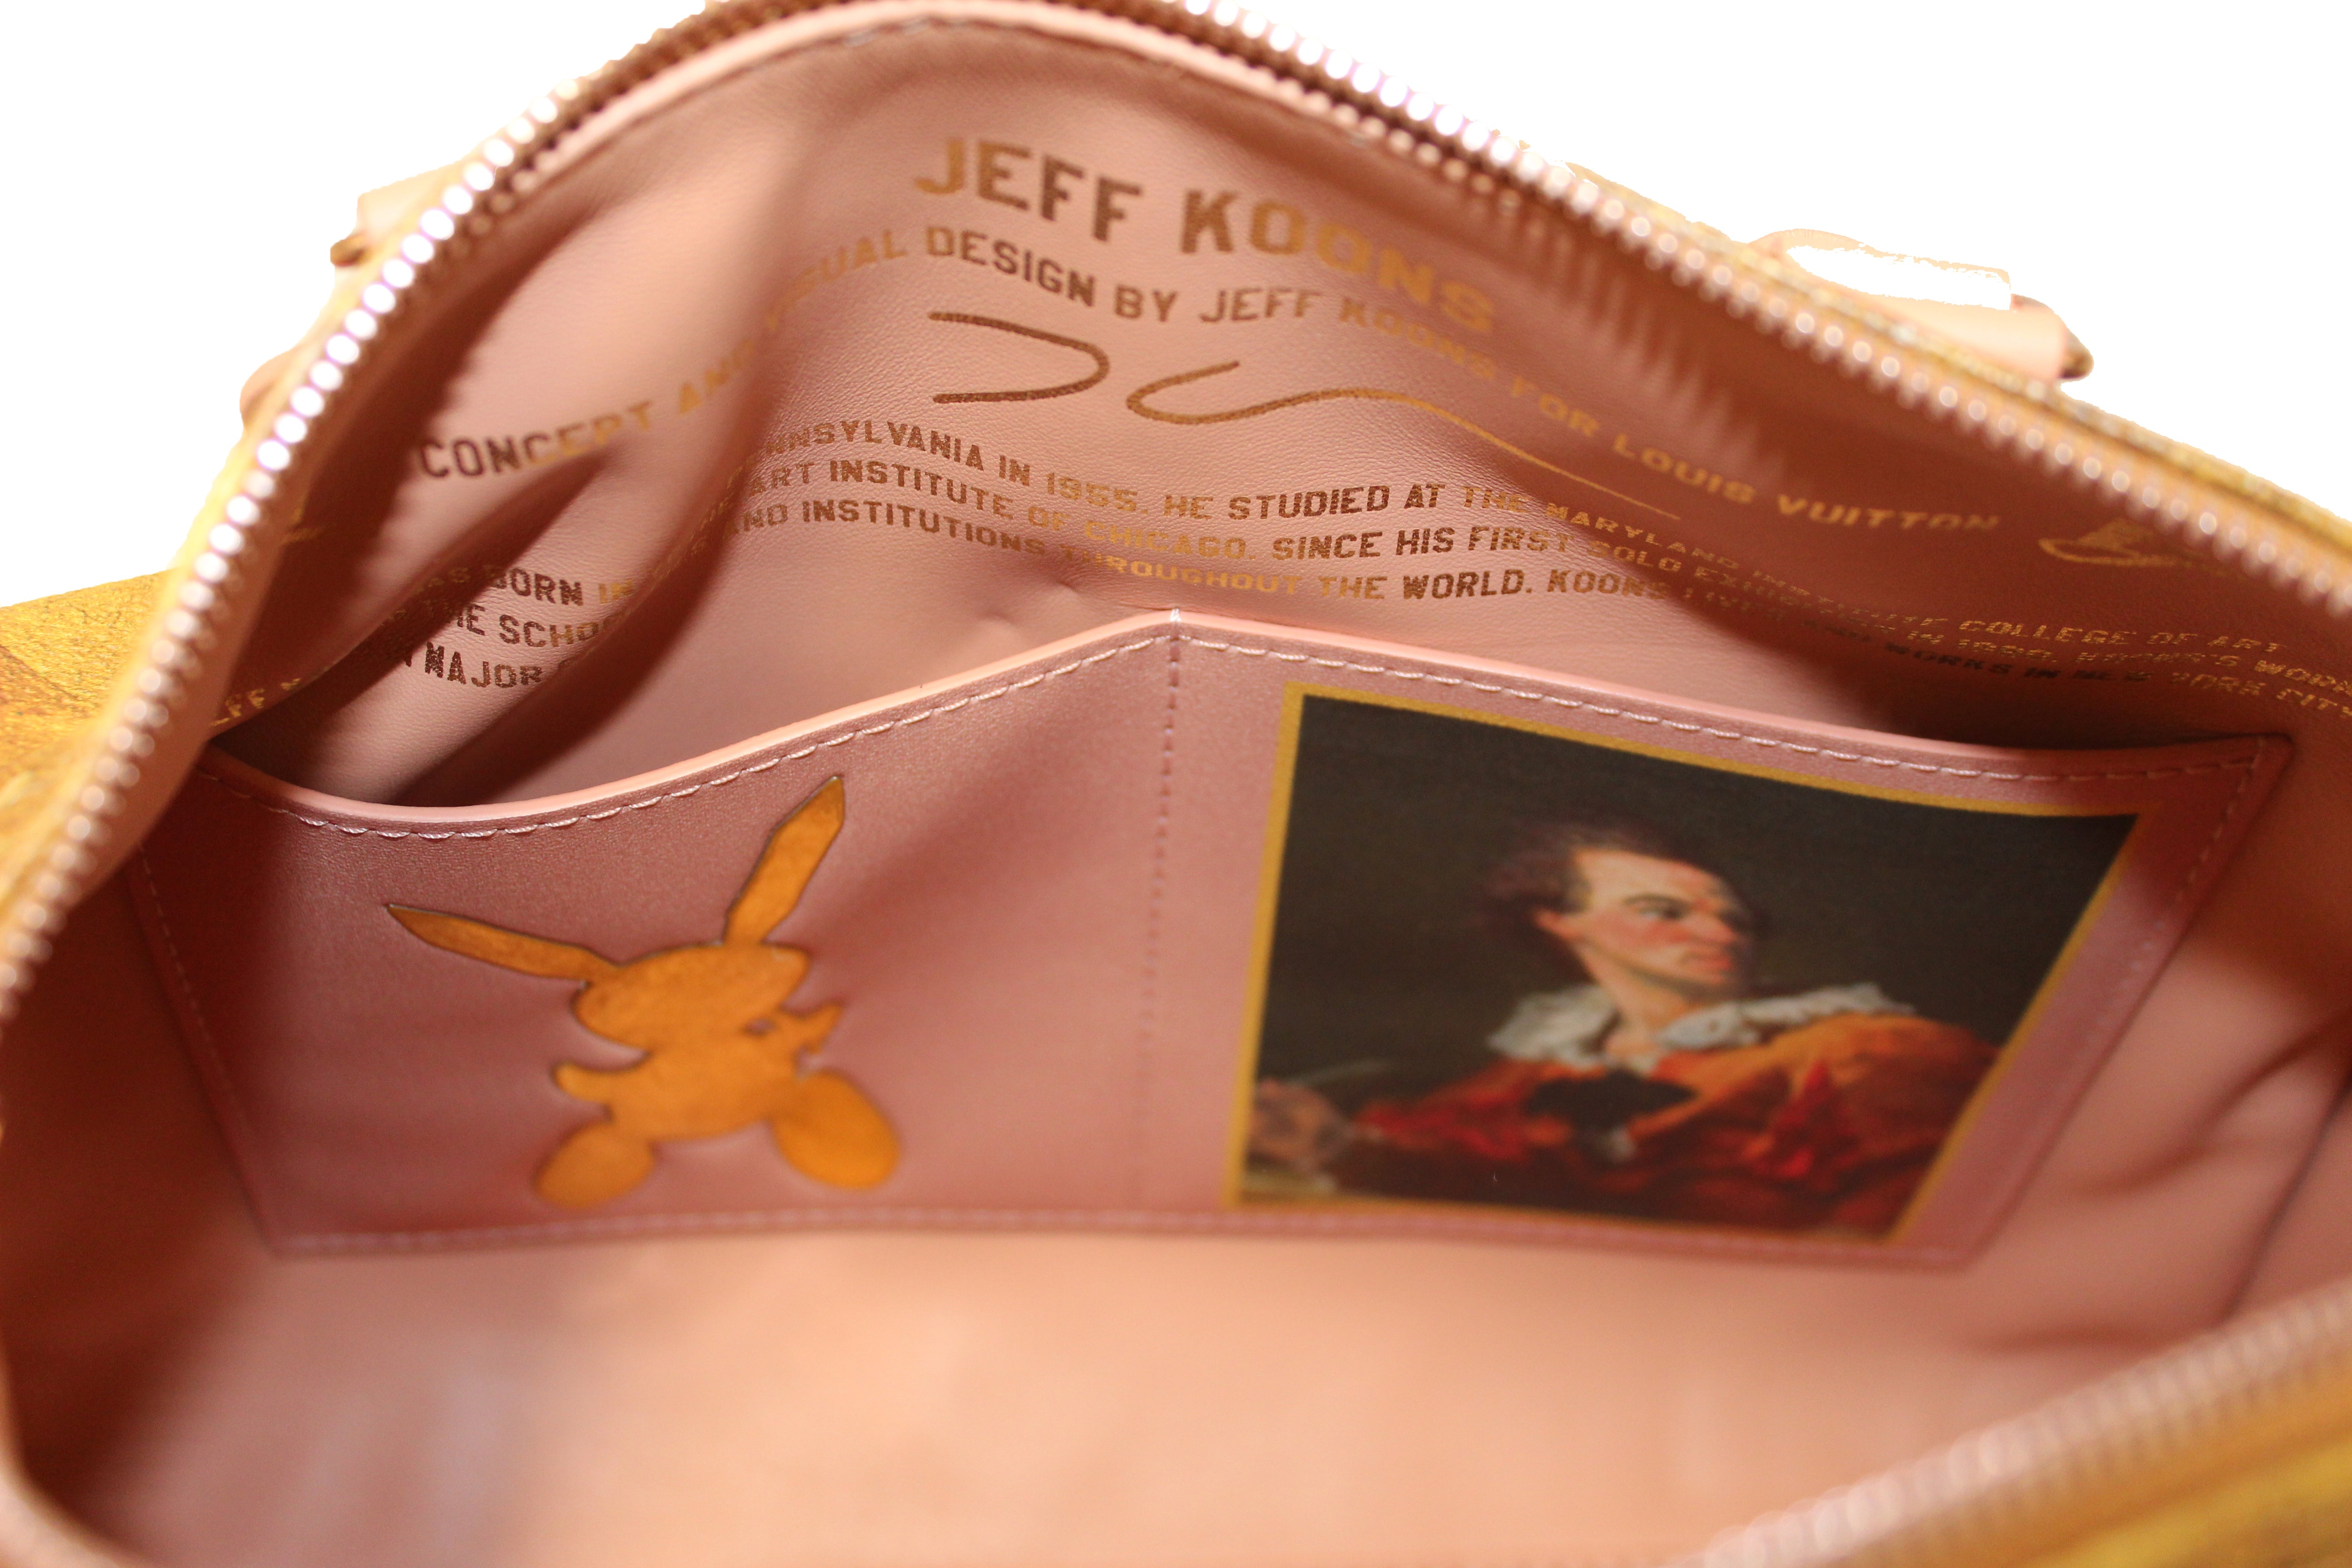 Louis Vuitton Masters x jeff koons Fragonard Bag